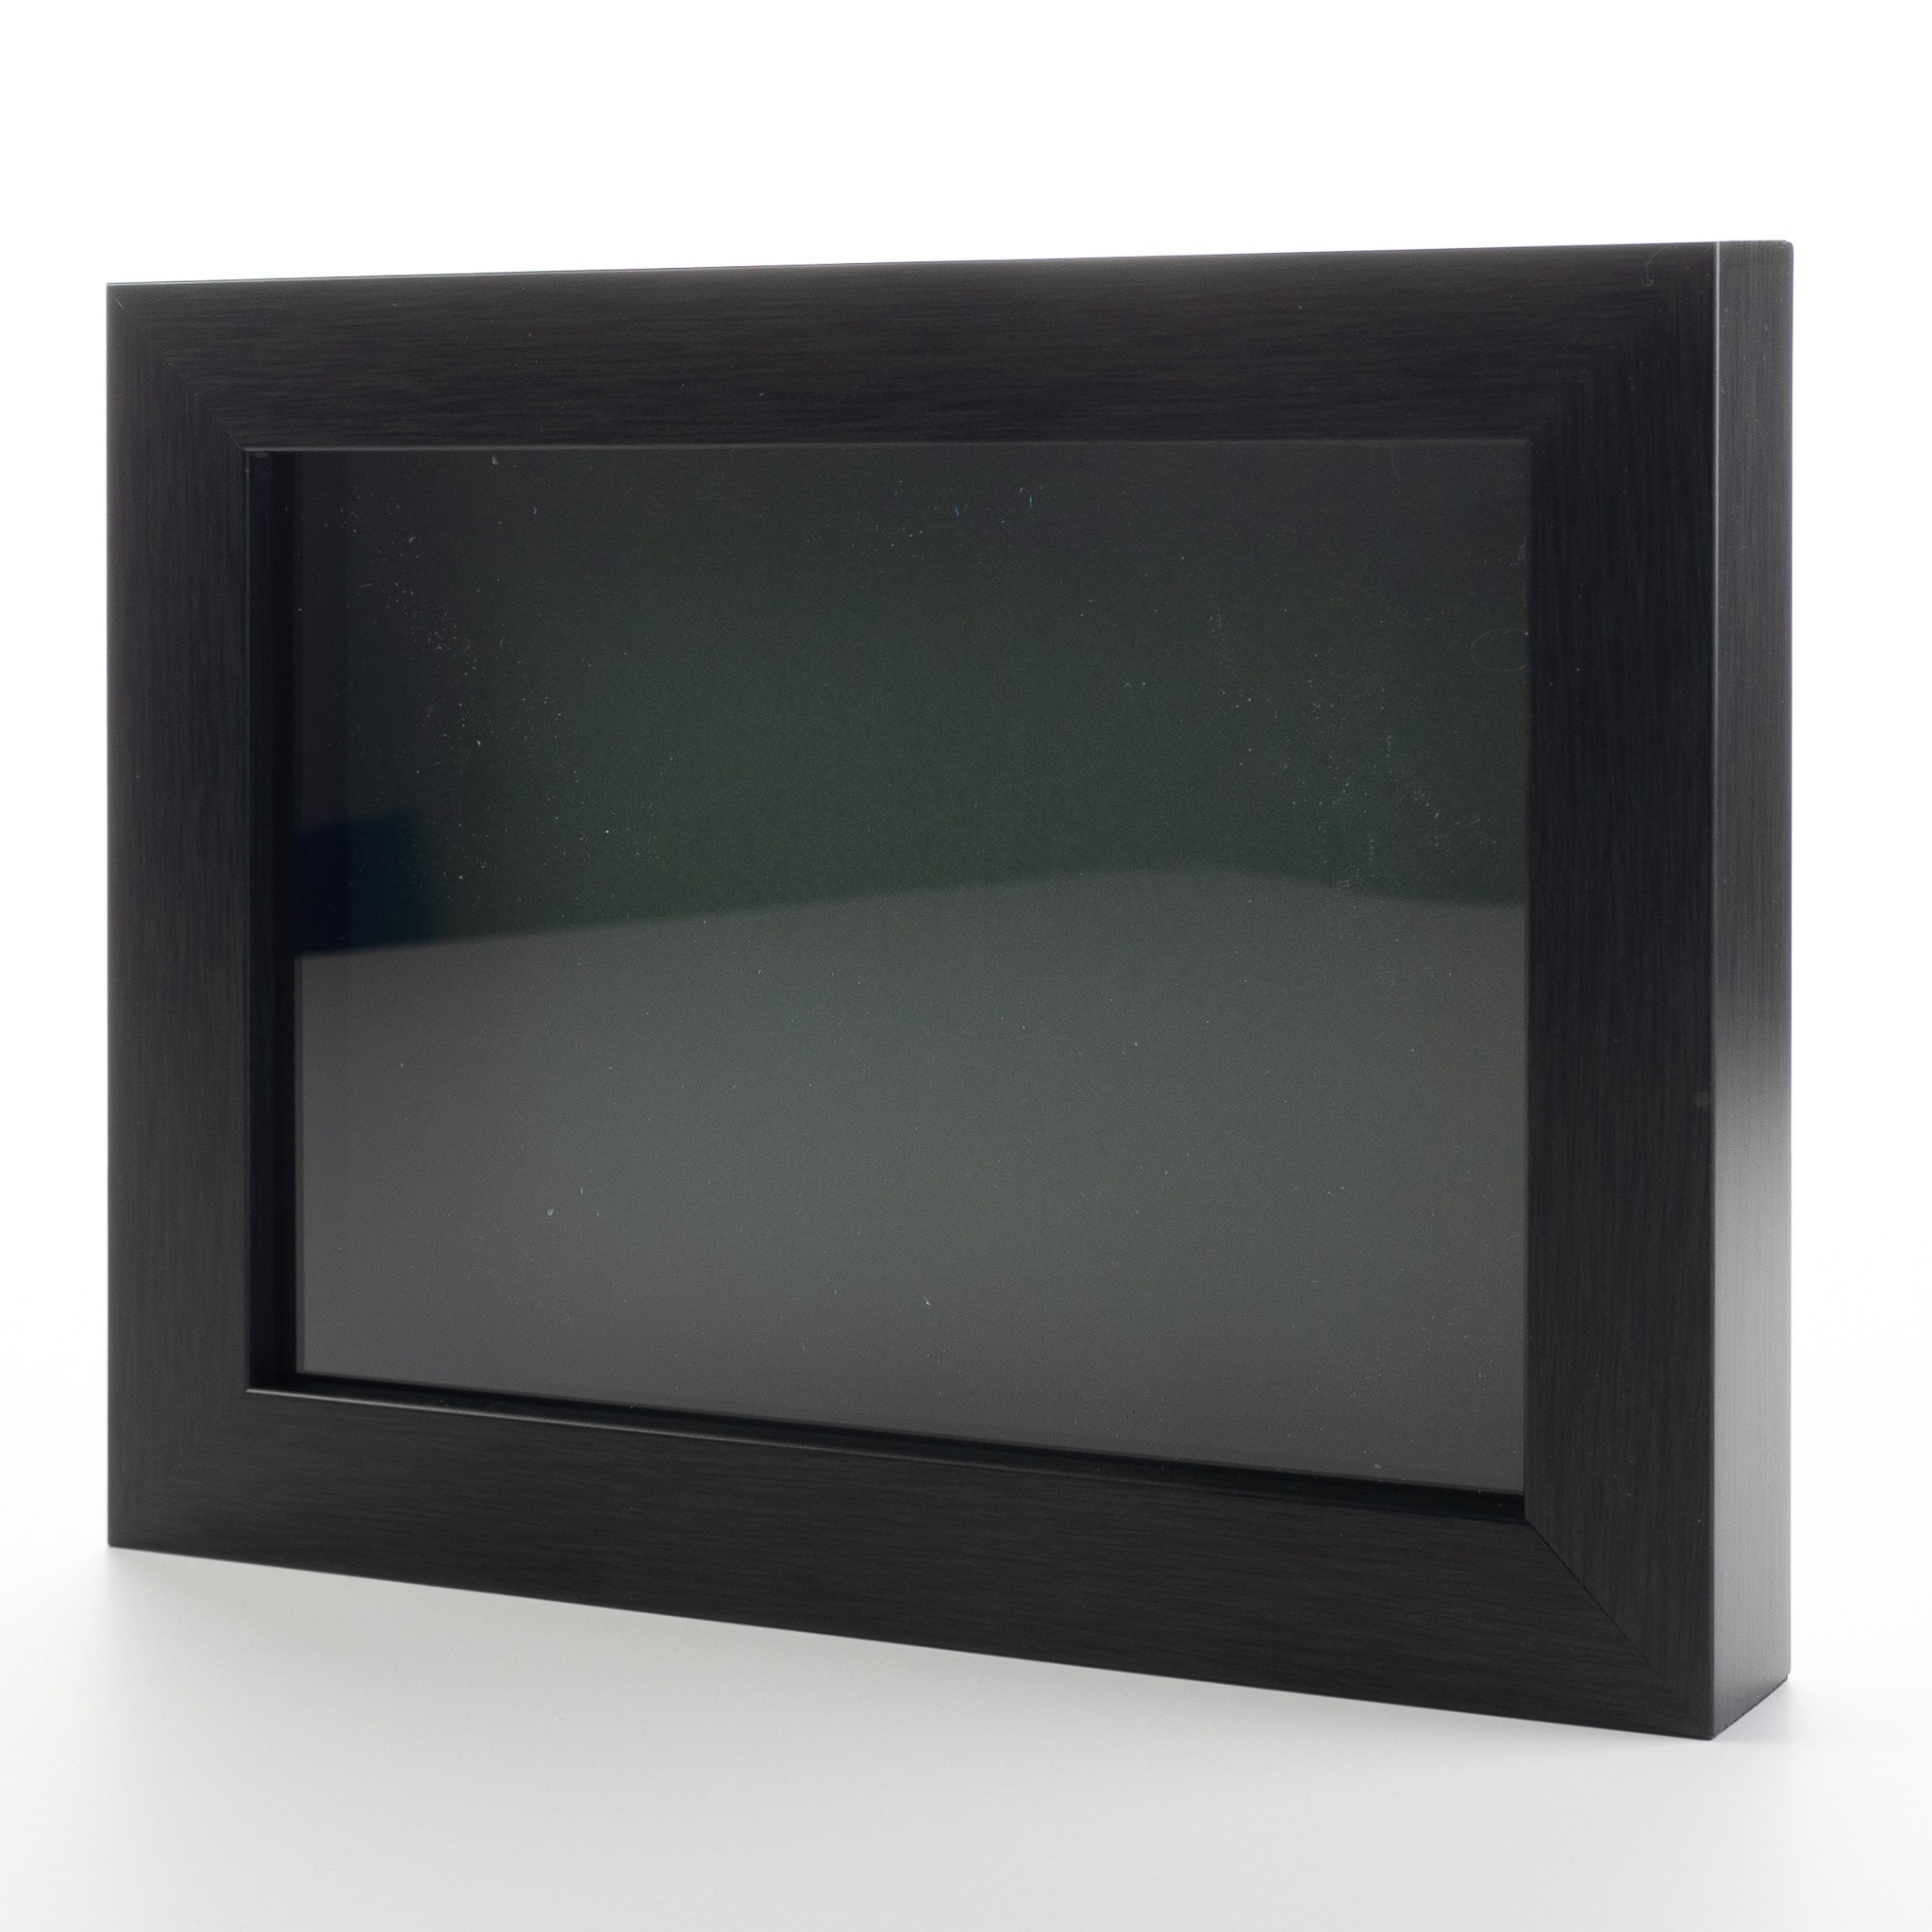 8x8 Picture Frame Black Wood 8x8 Frame 8x8 Frame Square - White